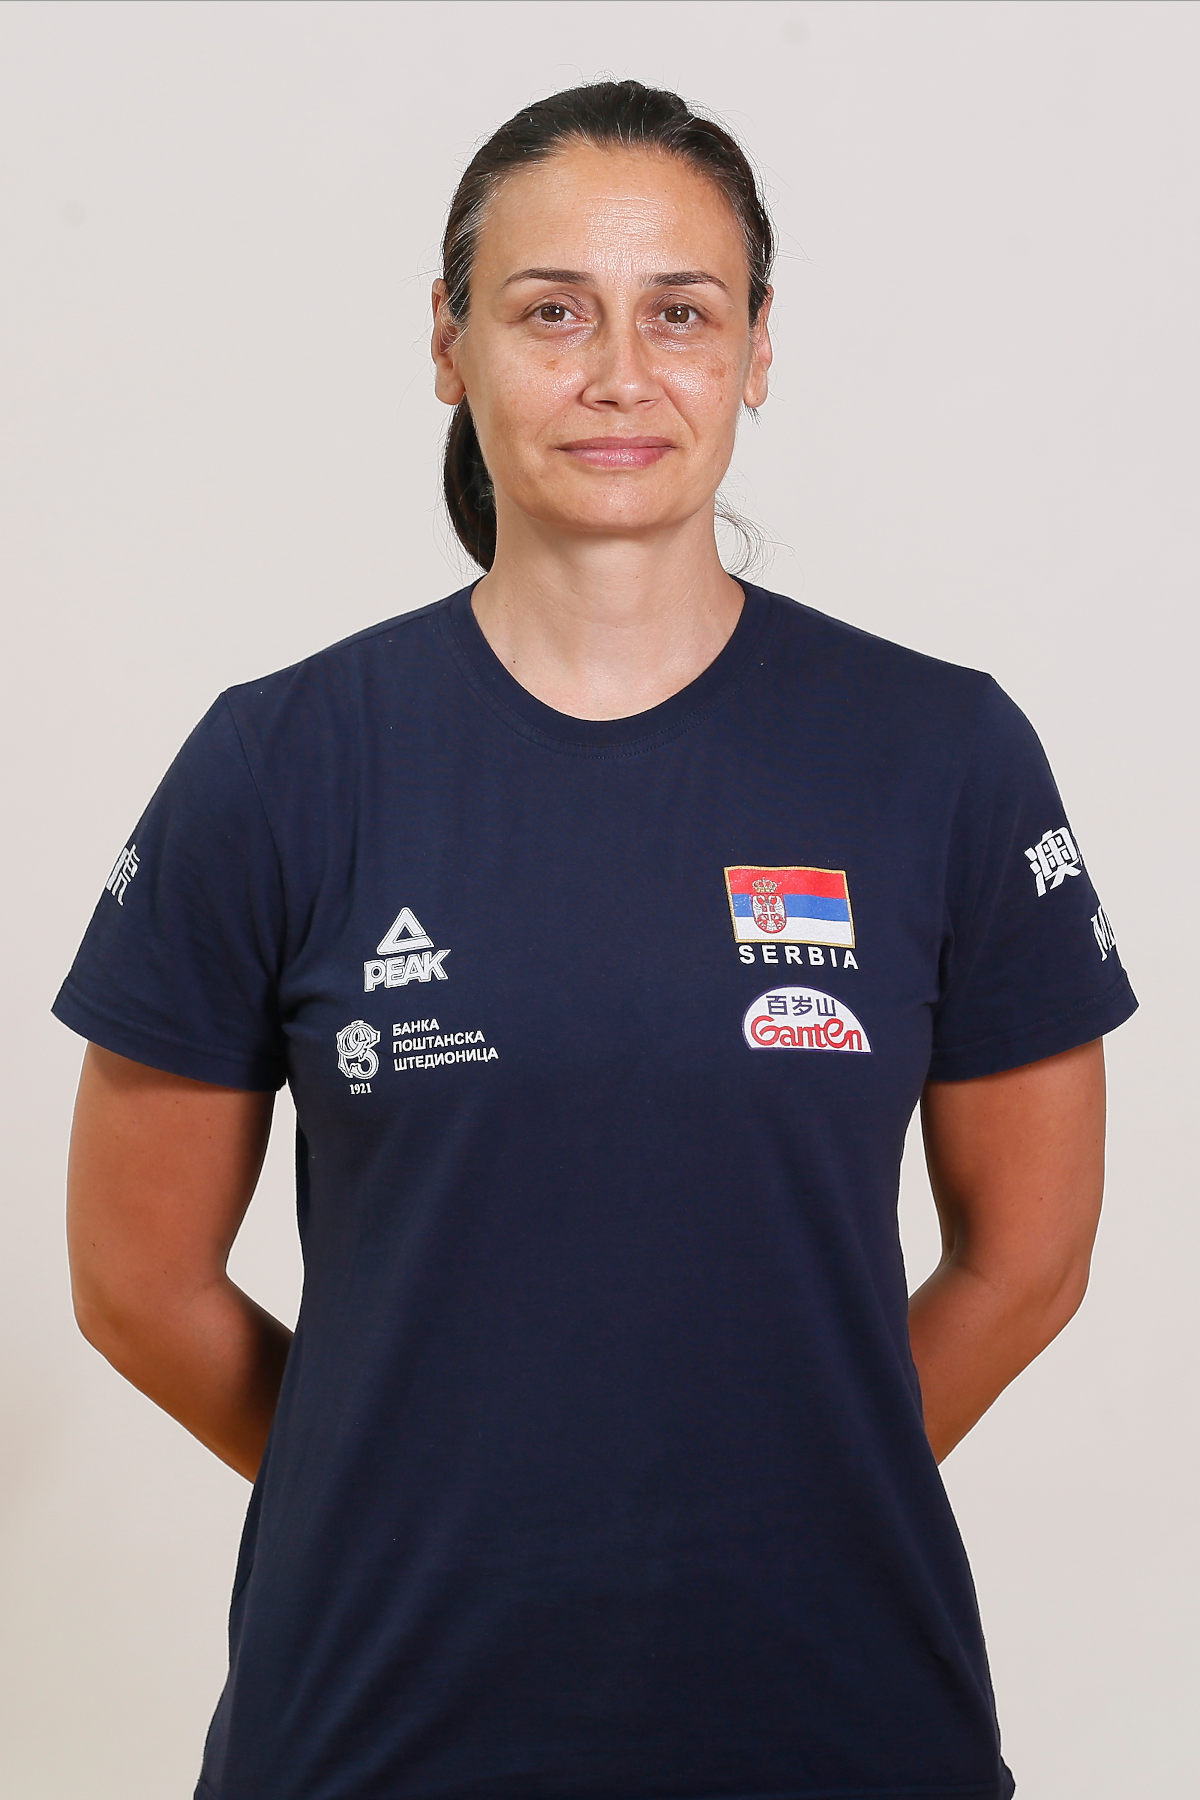 Mirjana Musulin